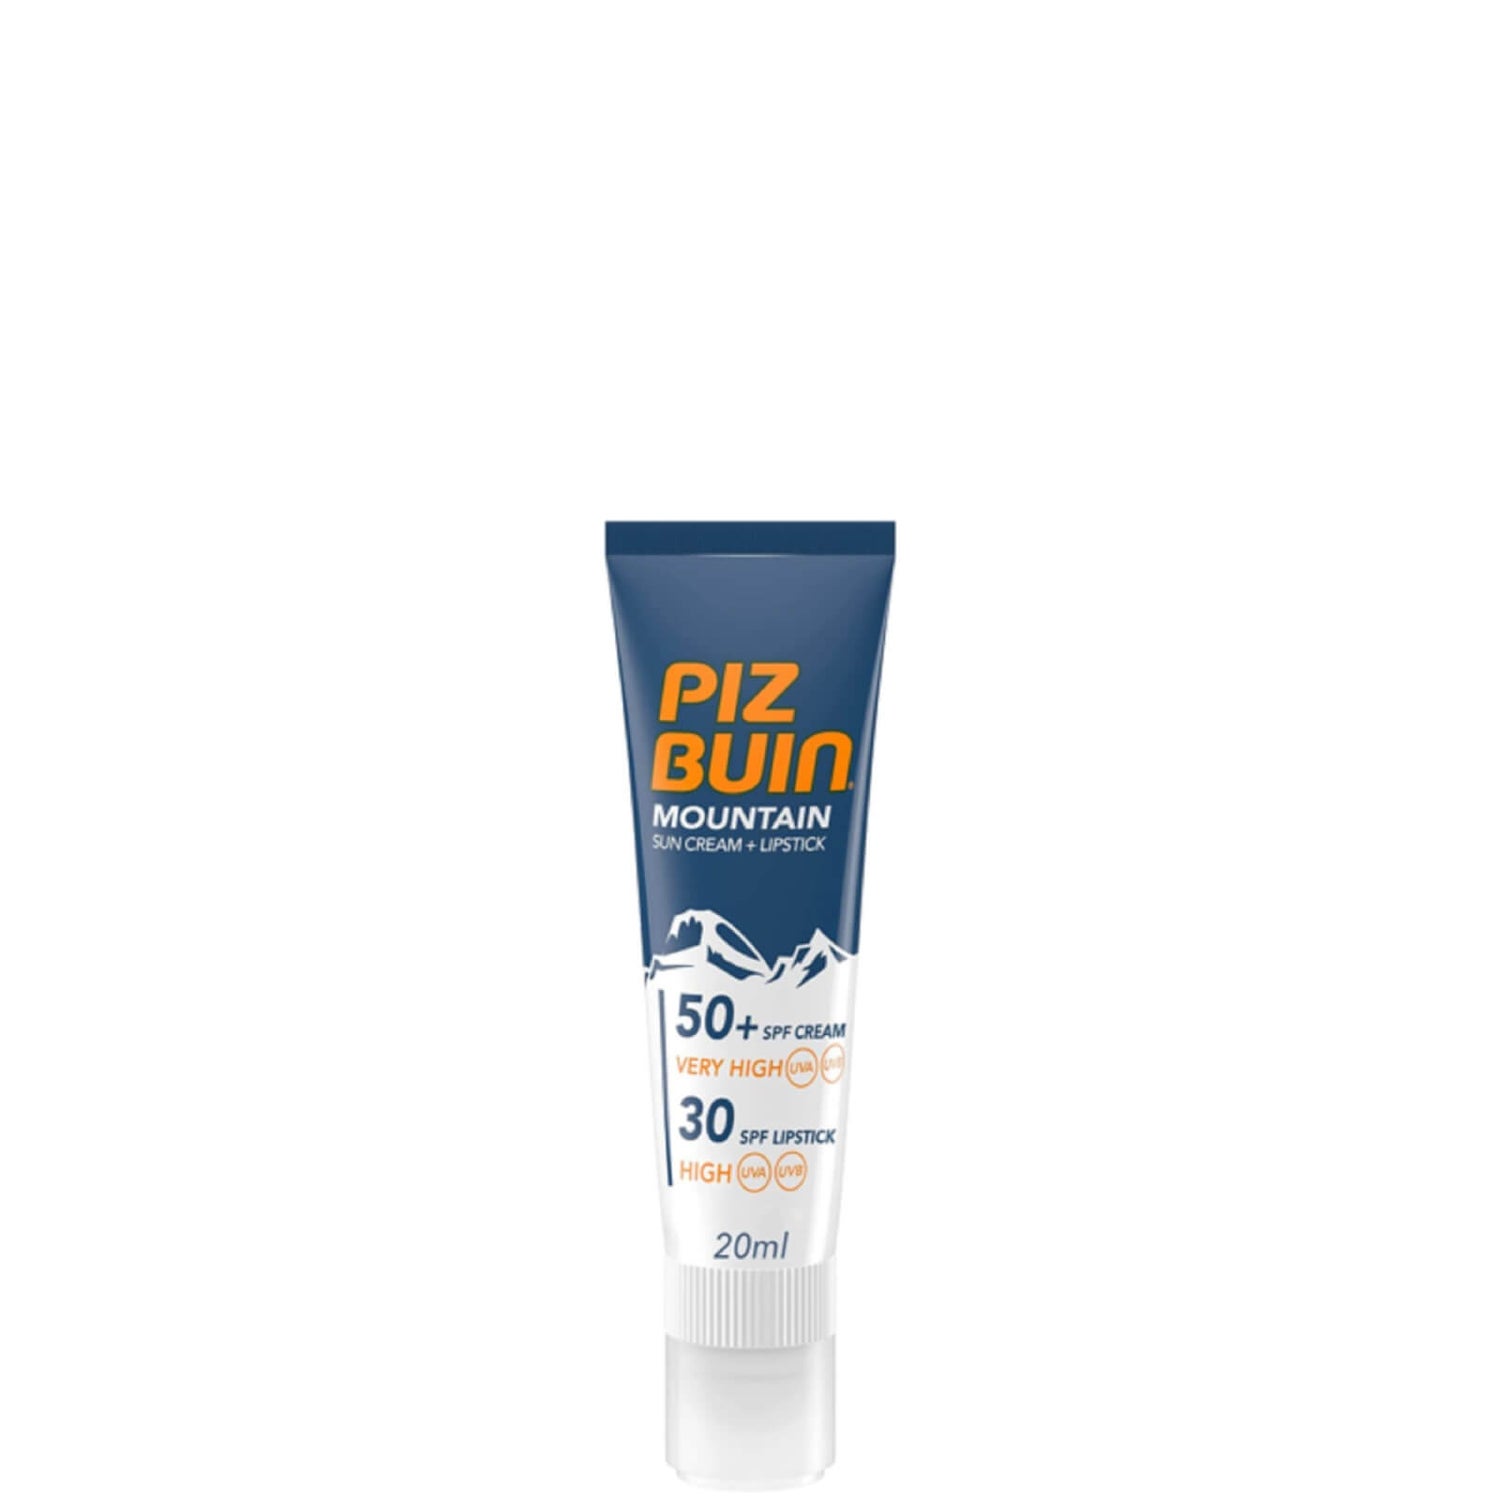 Piz Buin Mountain Sun Cream and Lipstick – Very High SPF 50 +